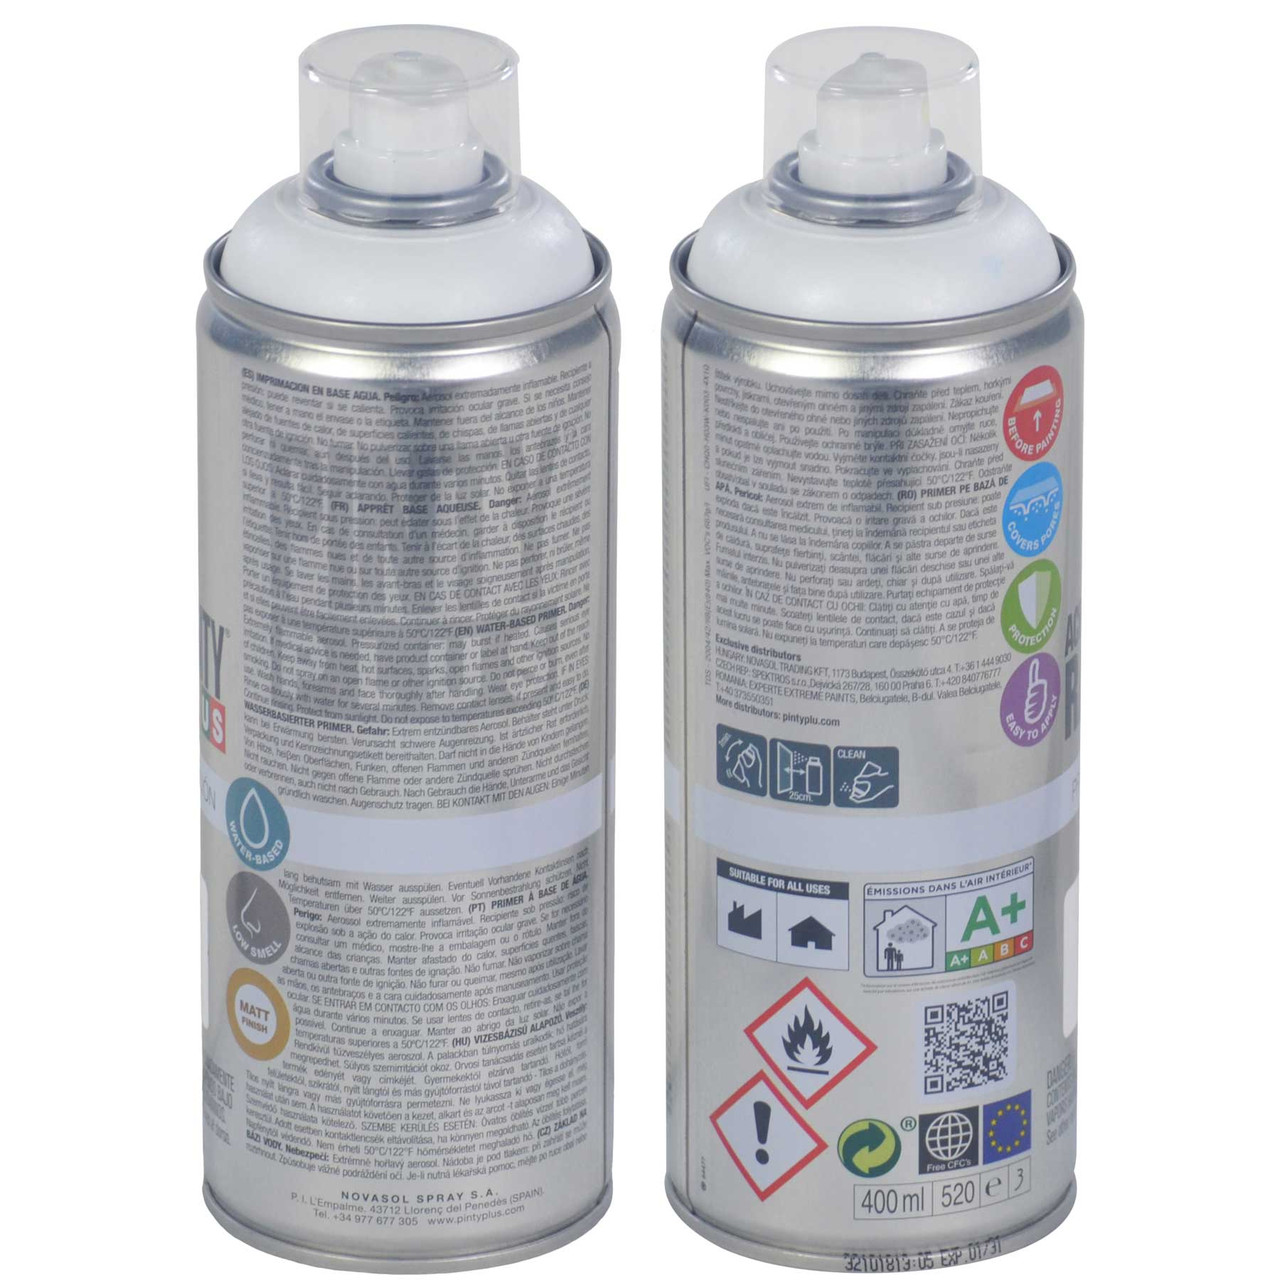 3 Cans Novasol PintyPlus Water Based Spray Paint - Sky Blue - 10.9-ounce  cans